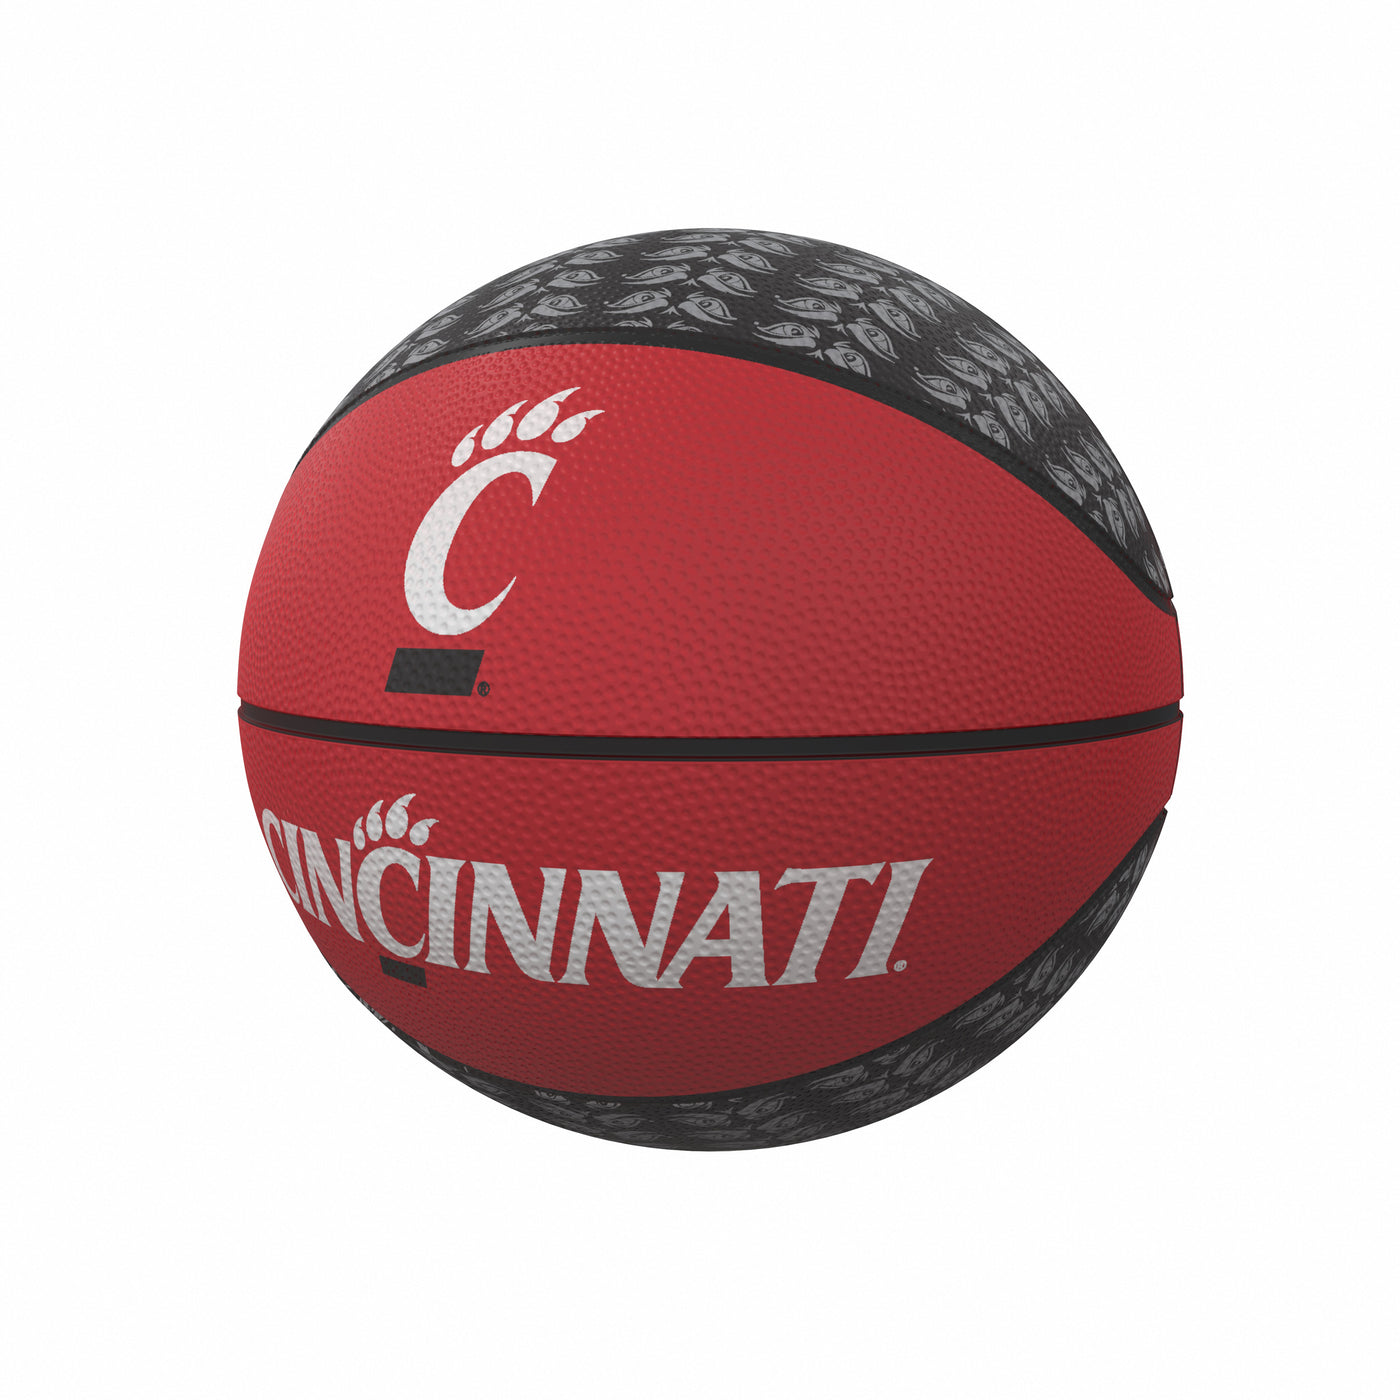 Cincinnati Repeating Logo Mini-Size Rubber Basketball